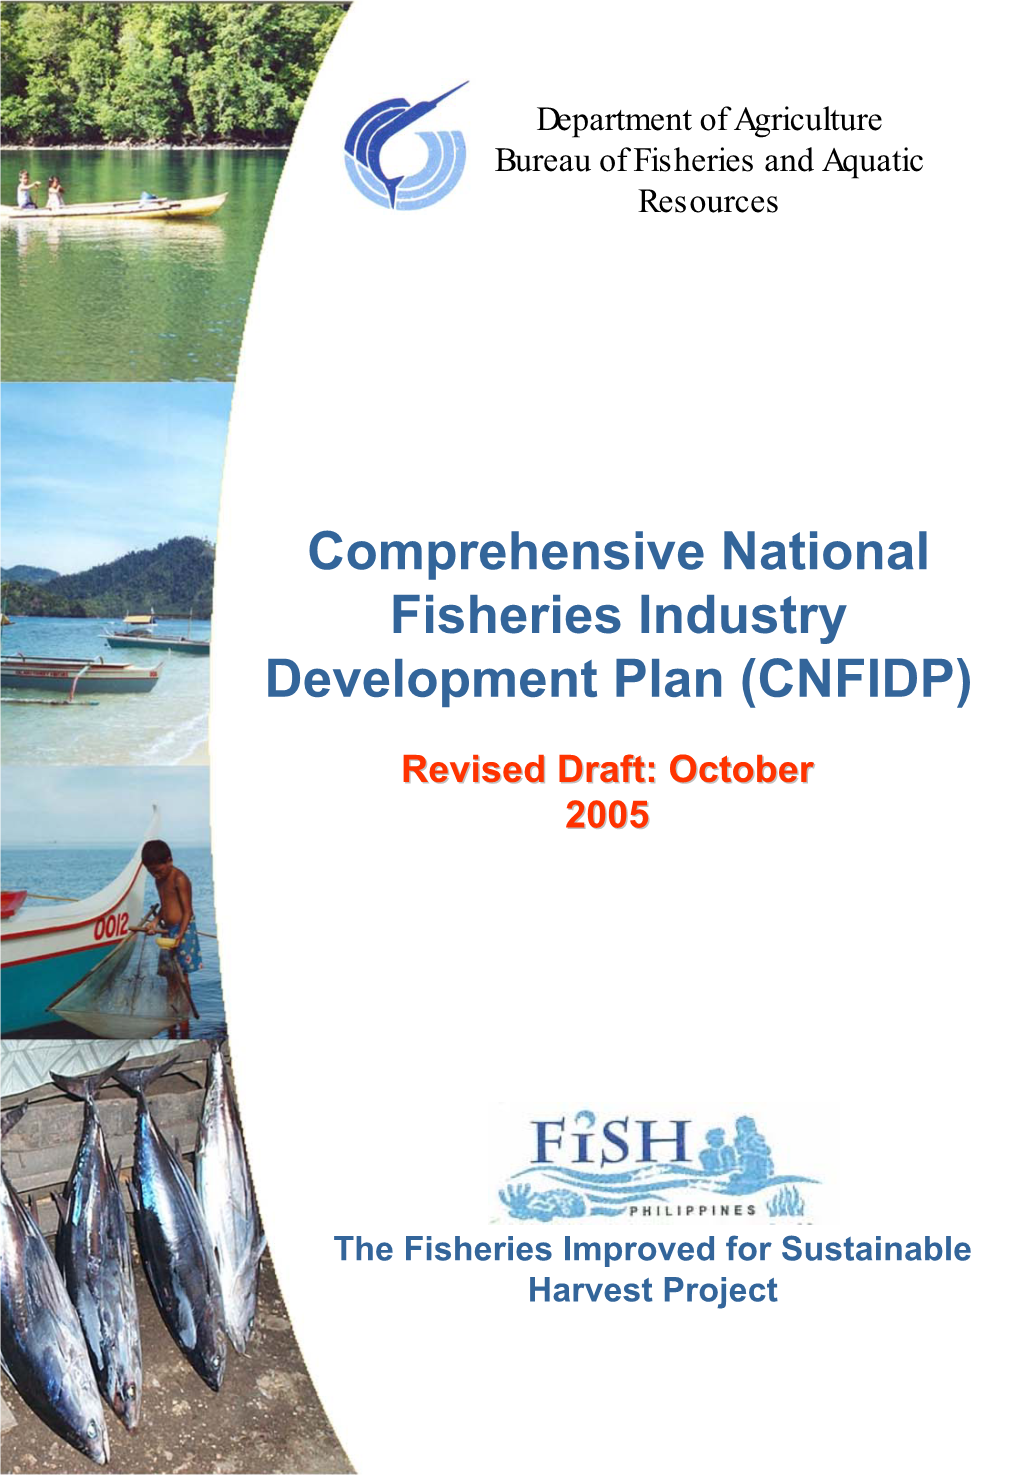 Comprehensive National Fisheries Industry Development Plan (CNFIDP)